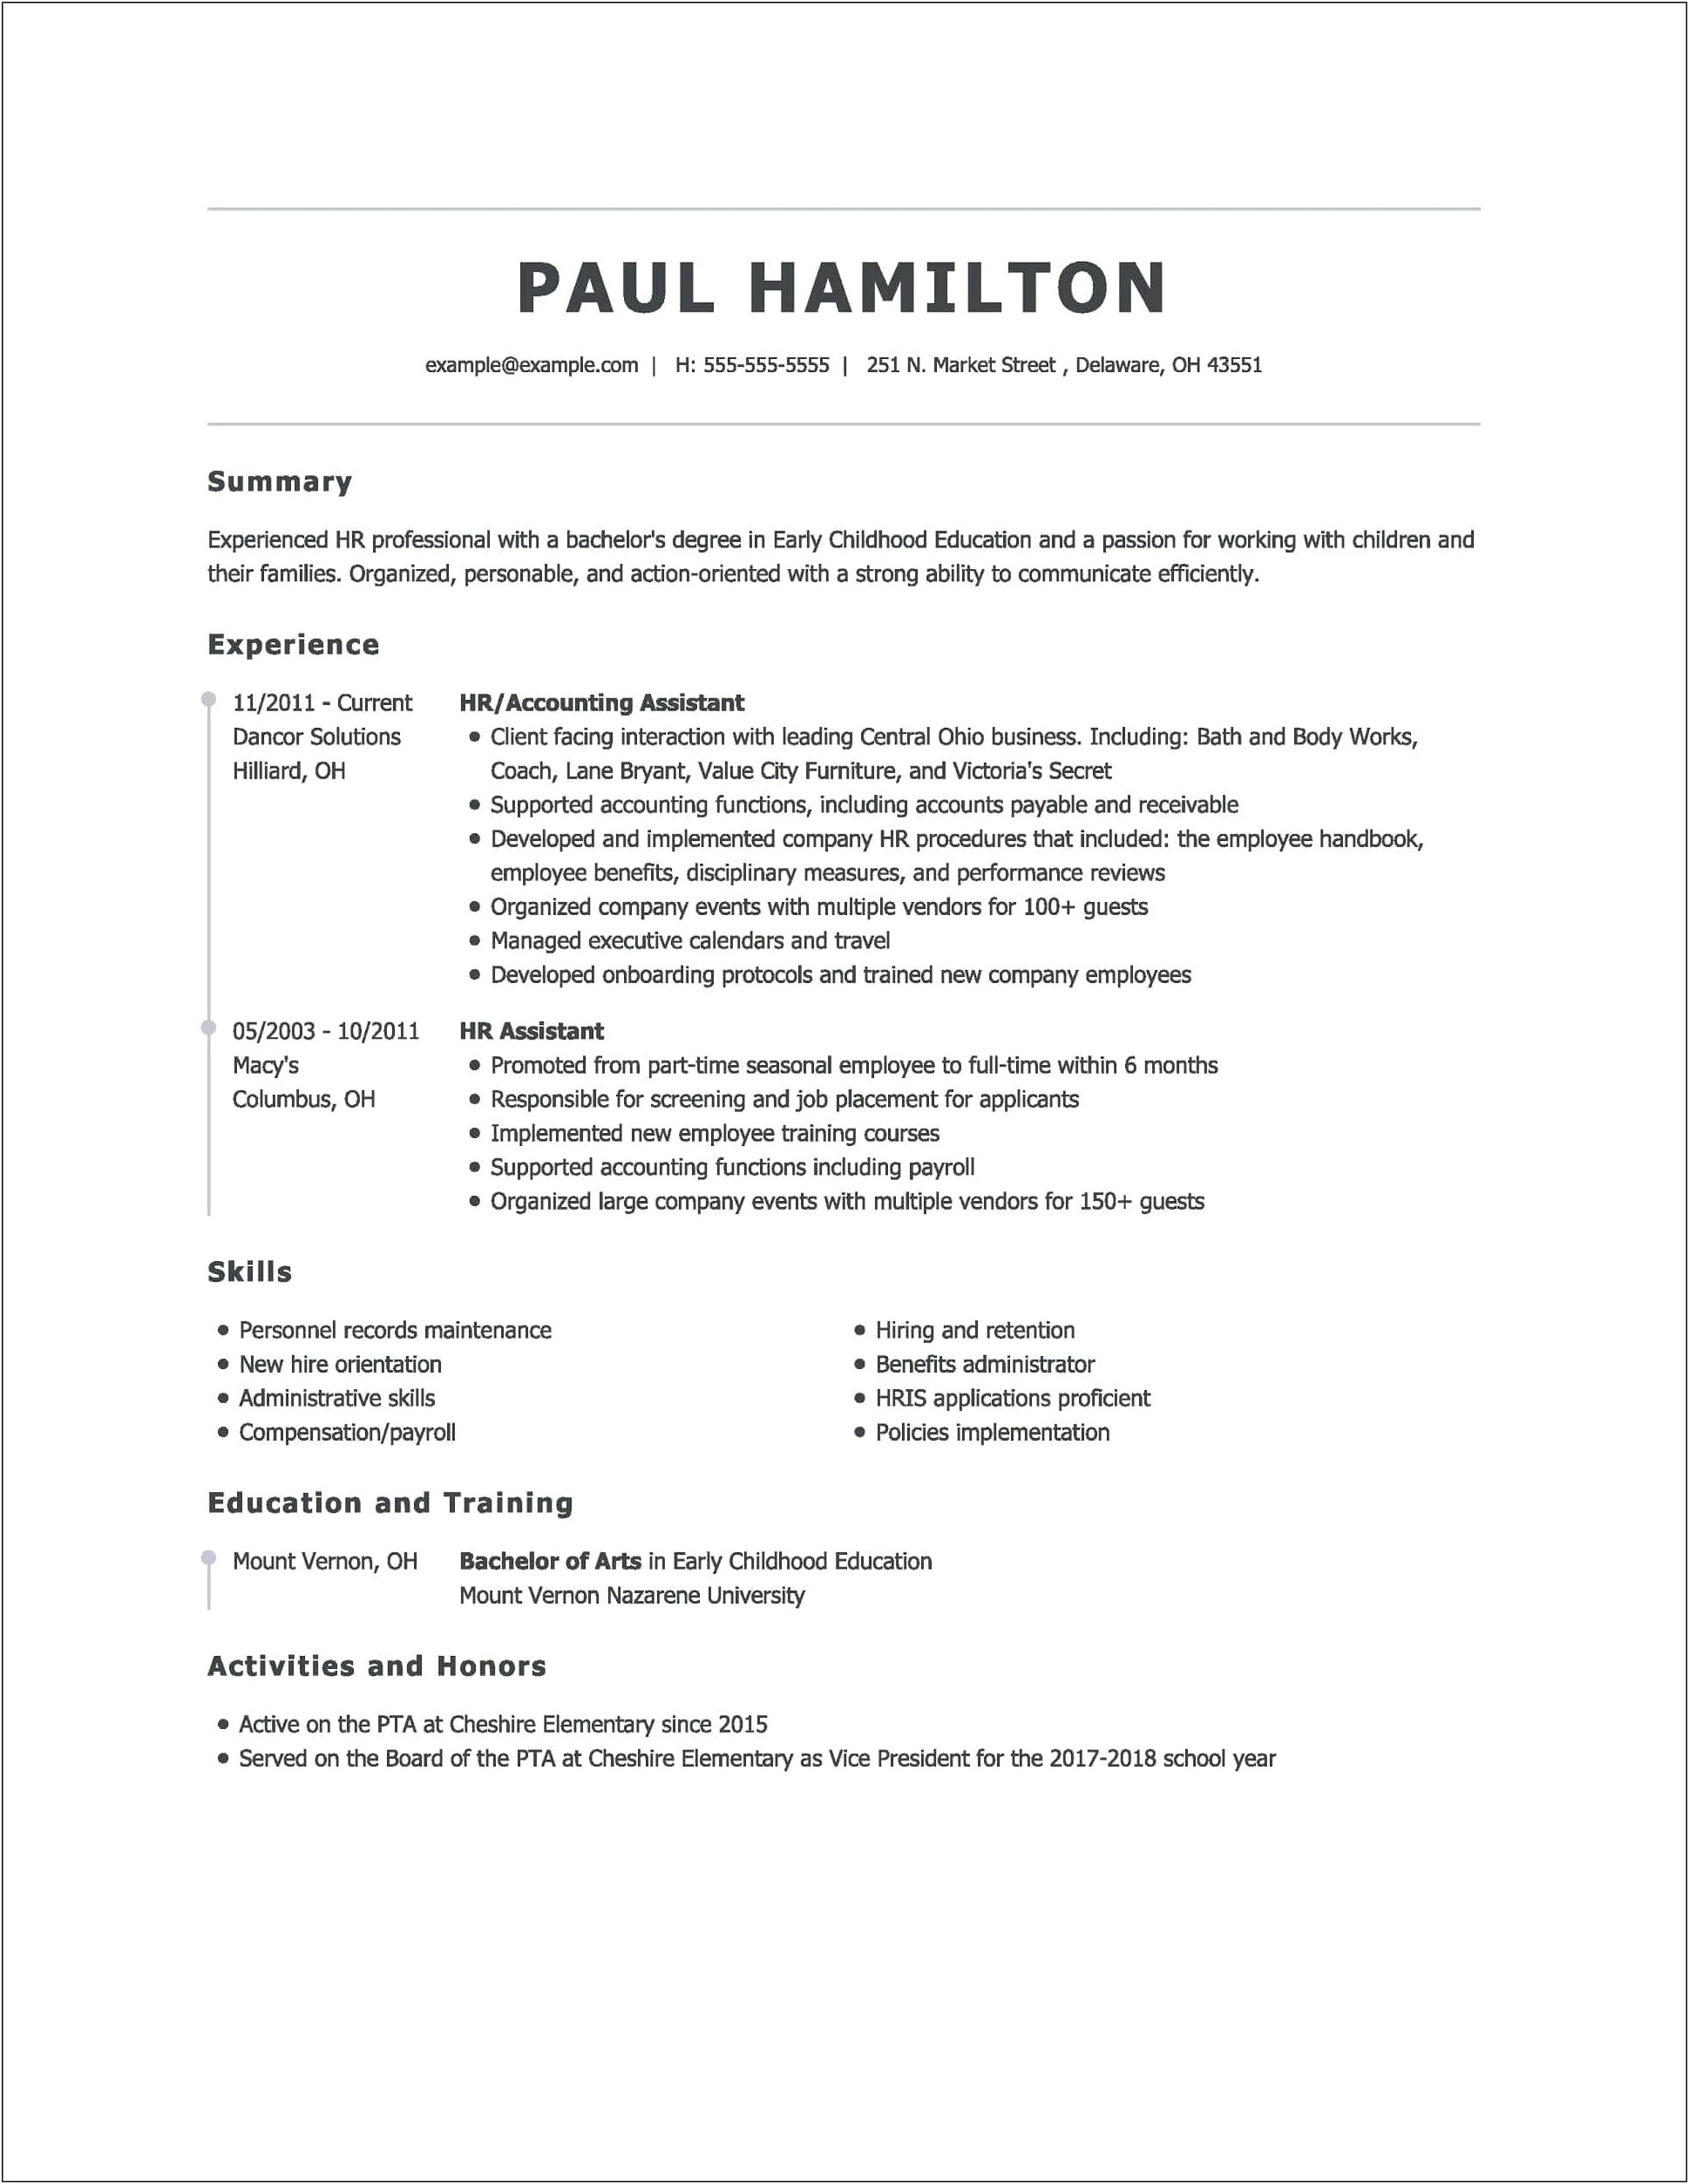 Online Job Application Resume Format